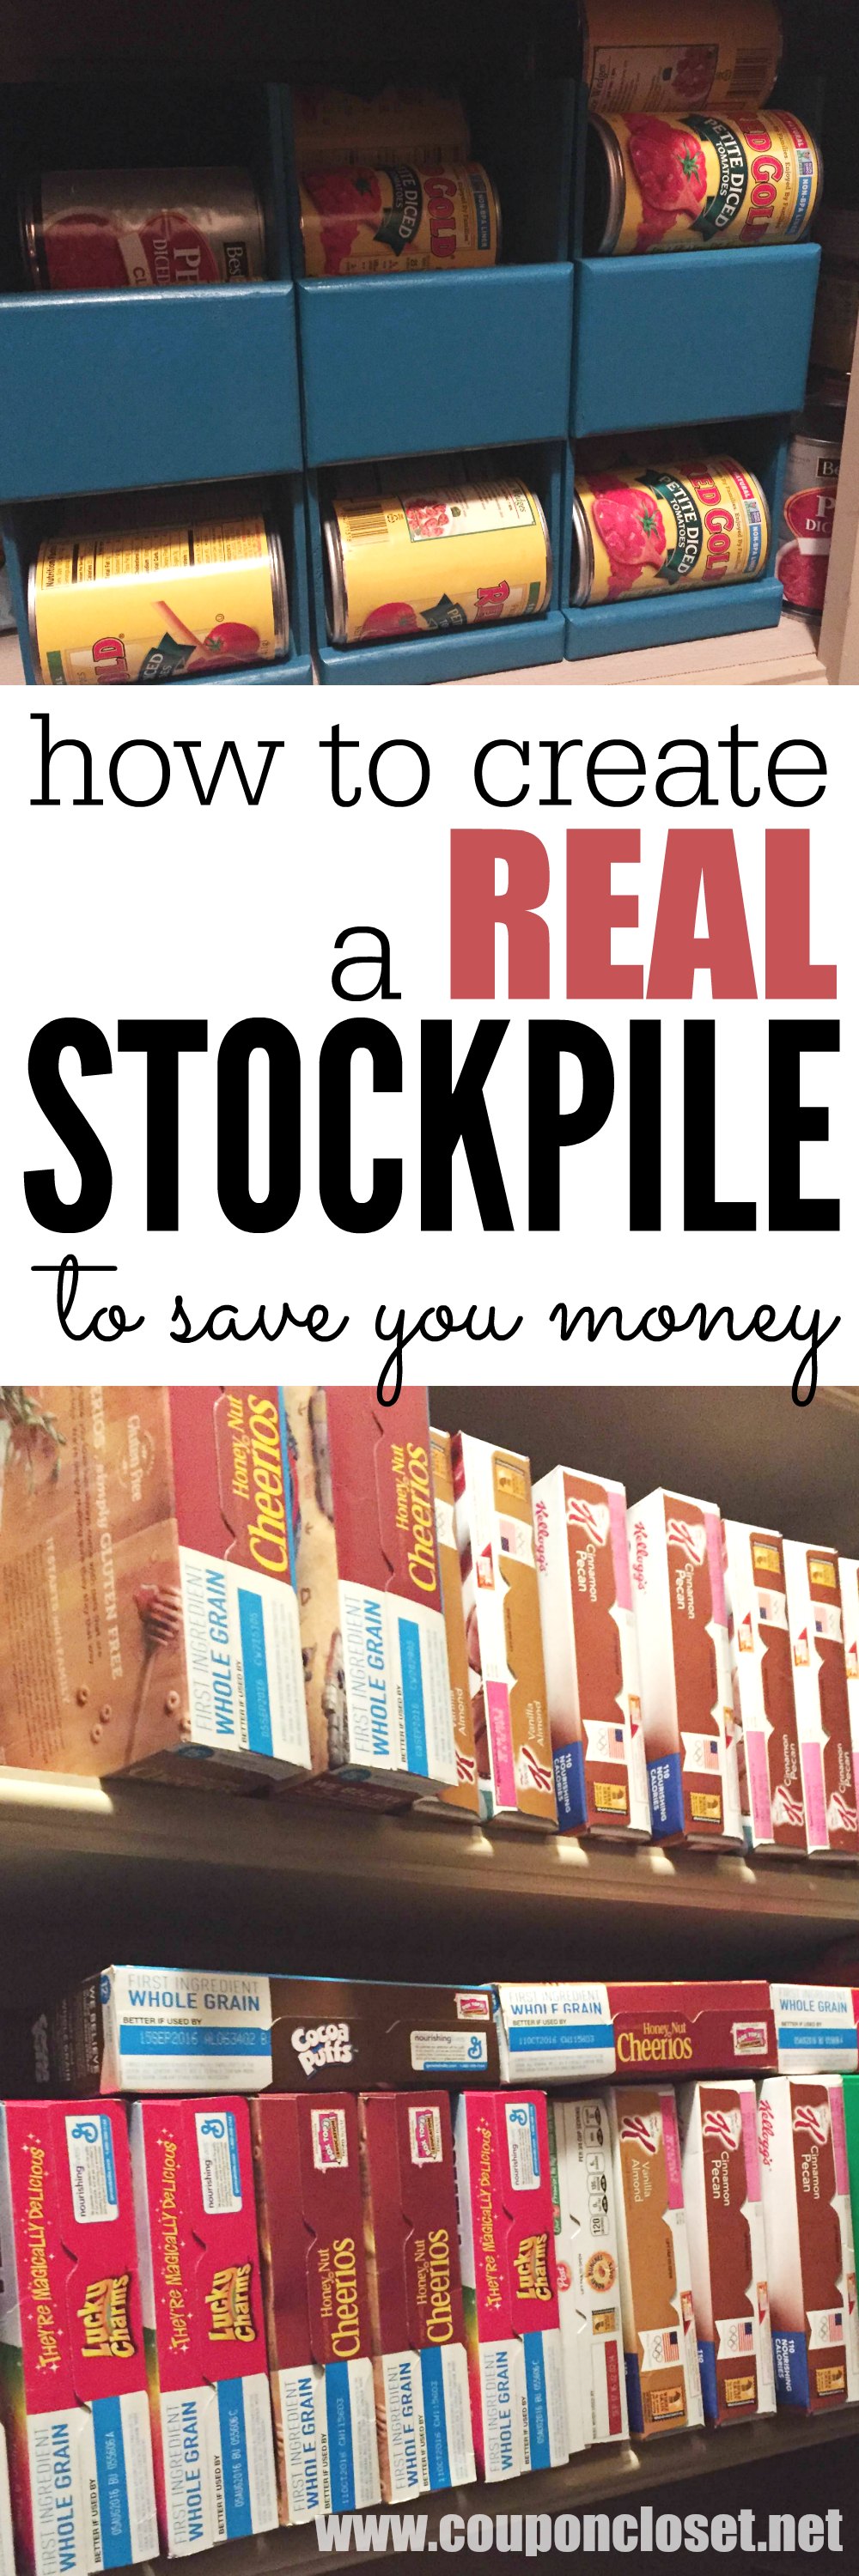 how to create a real stockpile